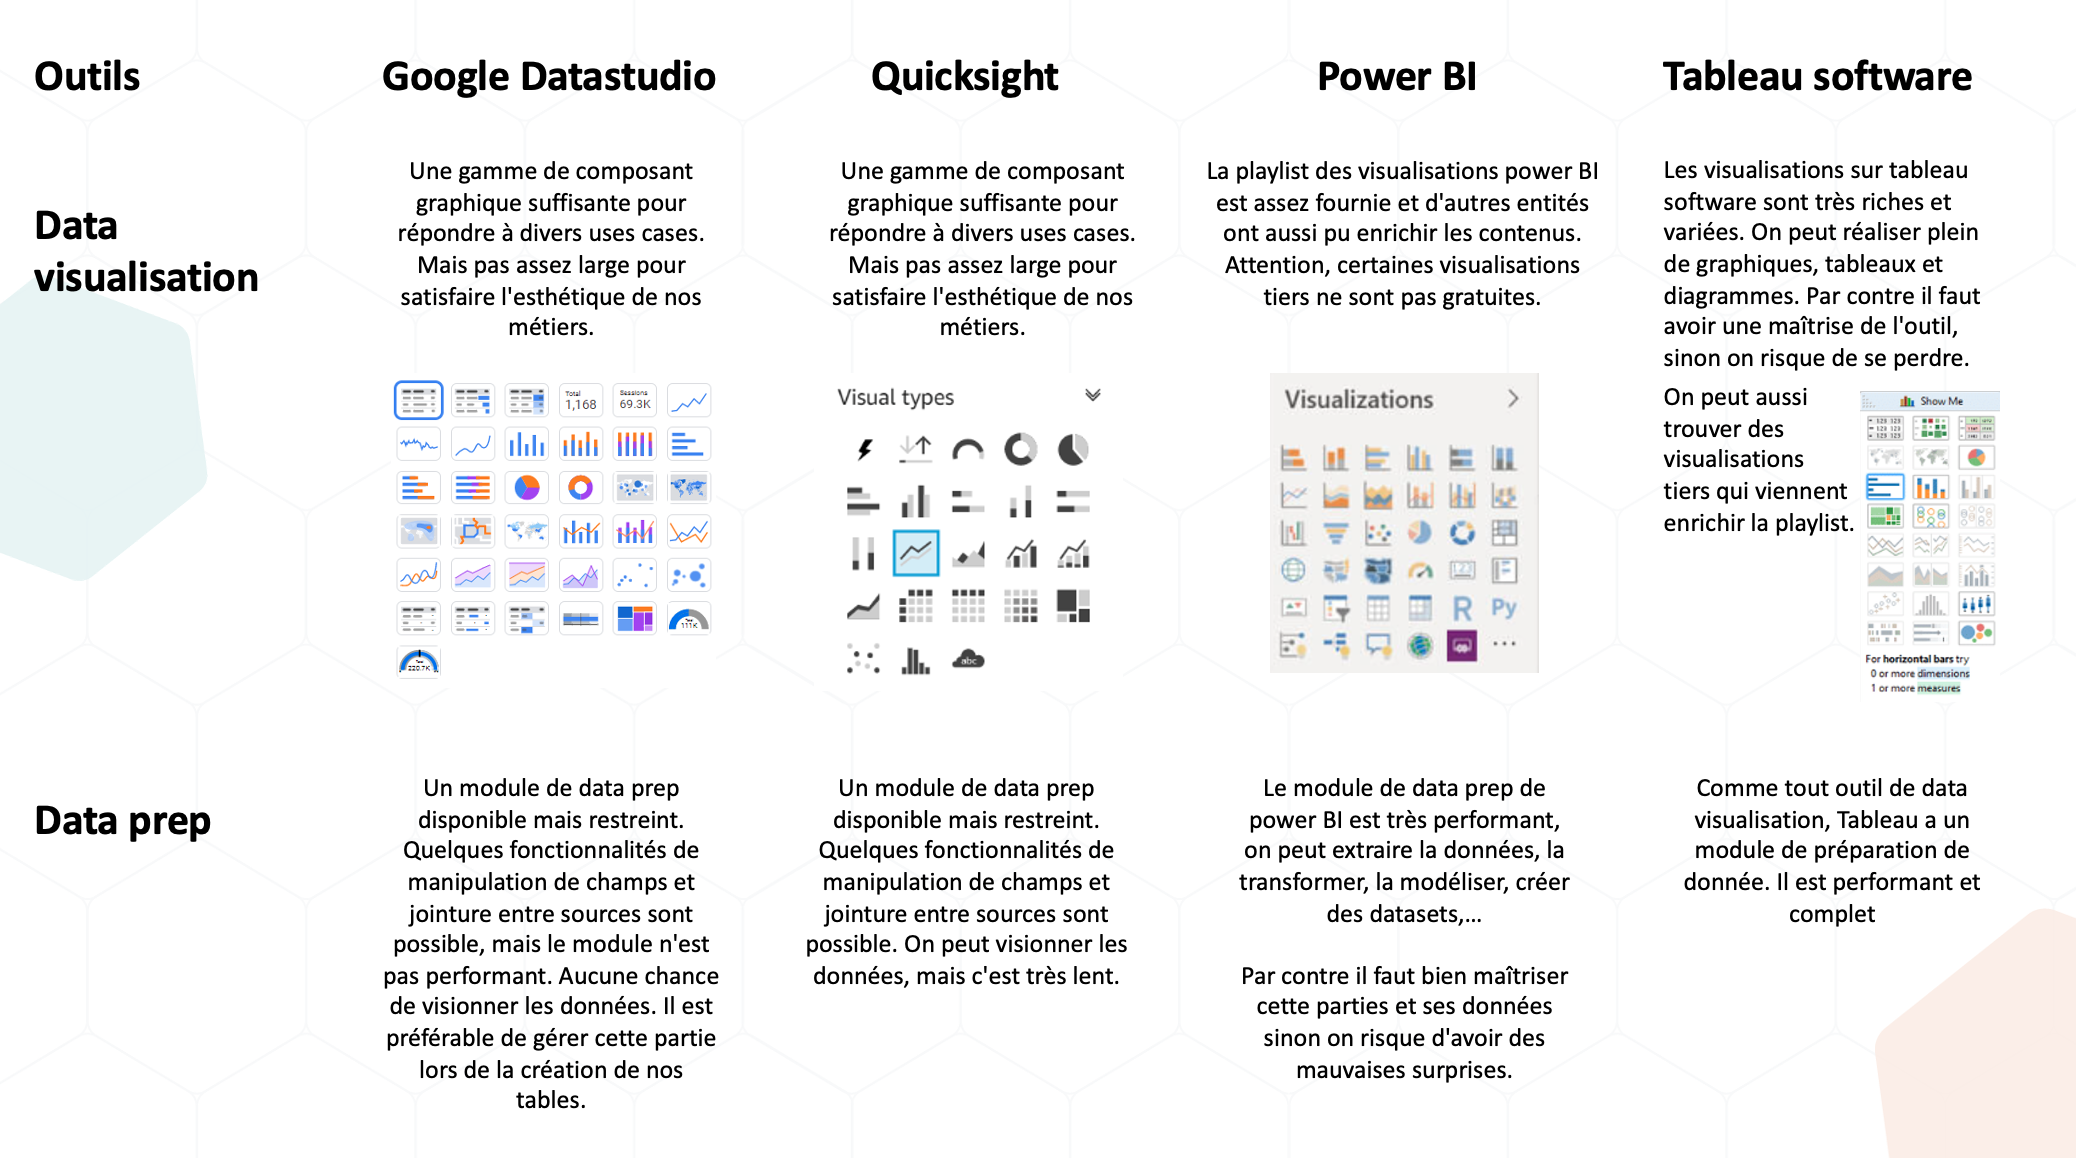 data visualisation des dataviw google quicksight power bi et tableau software by atecna